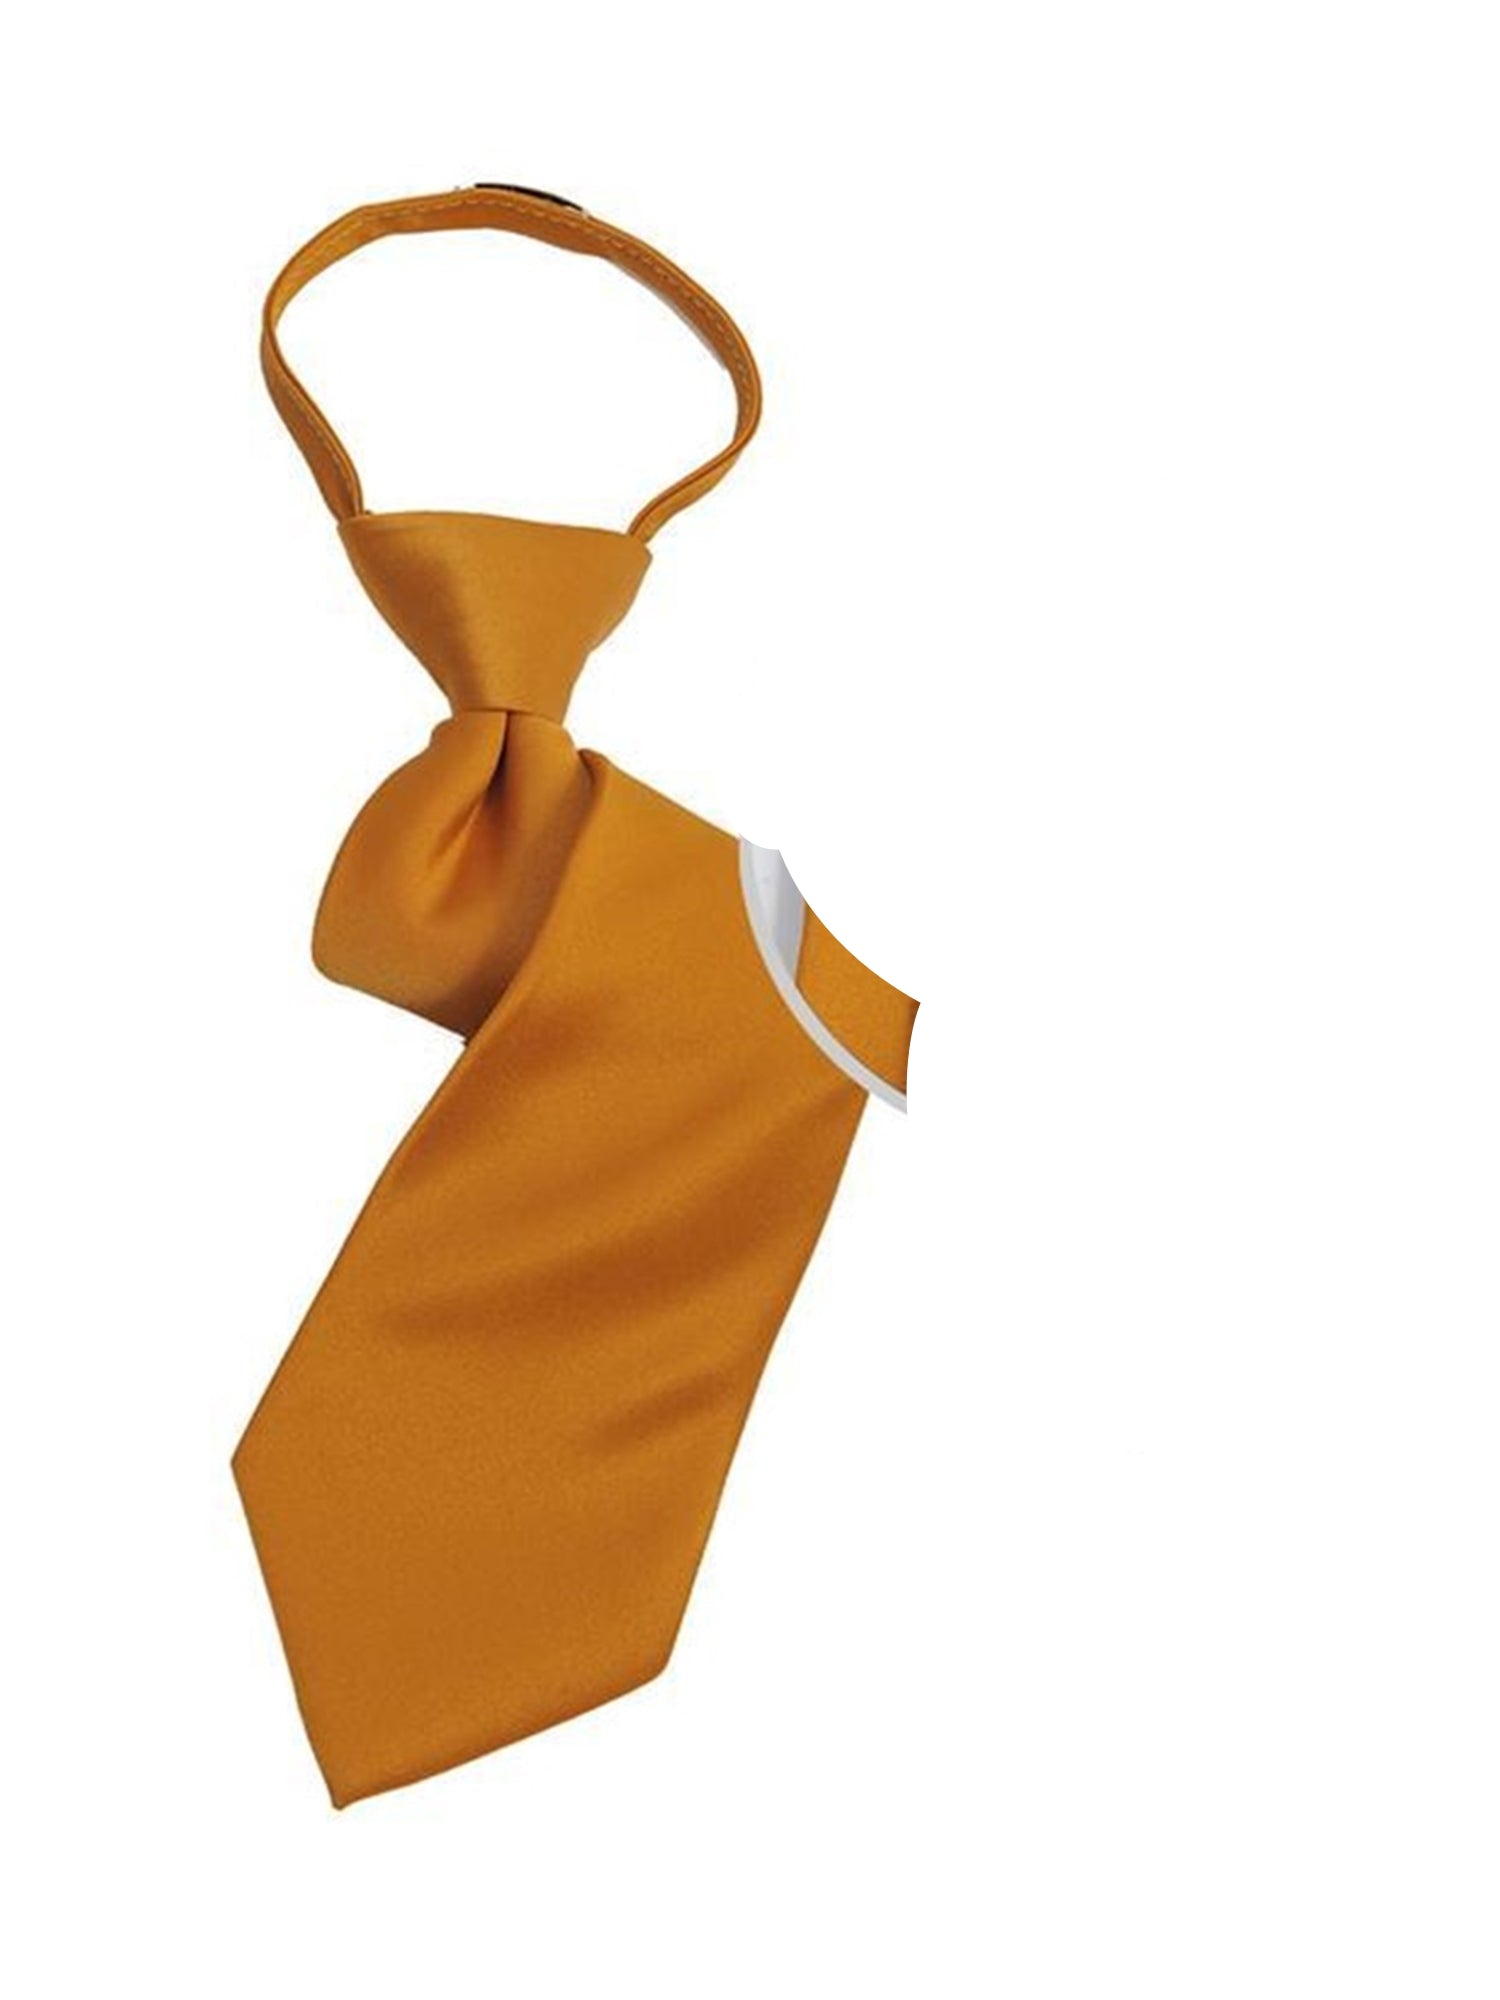 Boy's Solid Color Pre-tied Zipper Neck Tie Dapper Neckwear TheDapperTie Gold 8" x 2" 